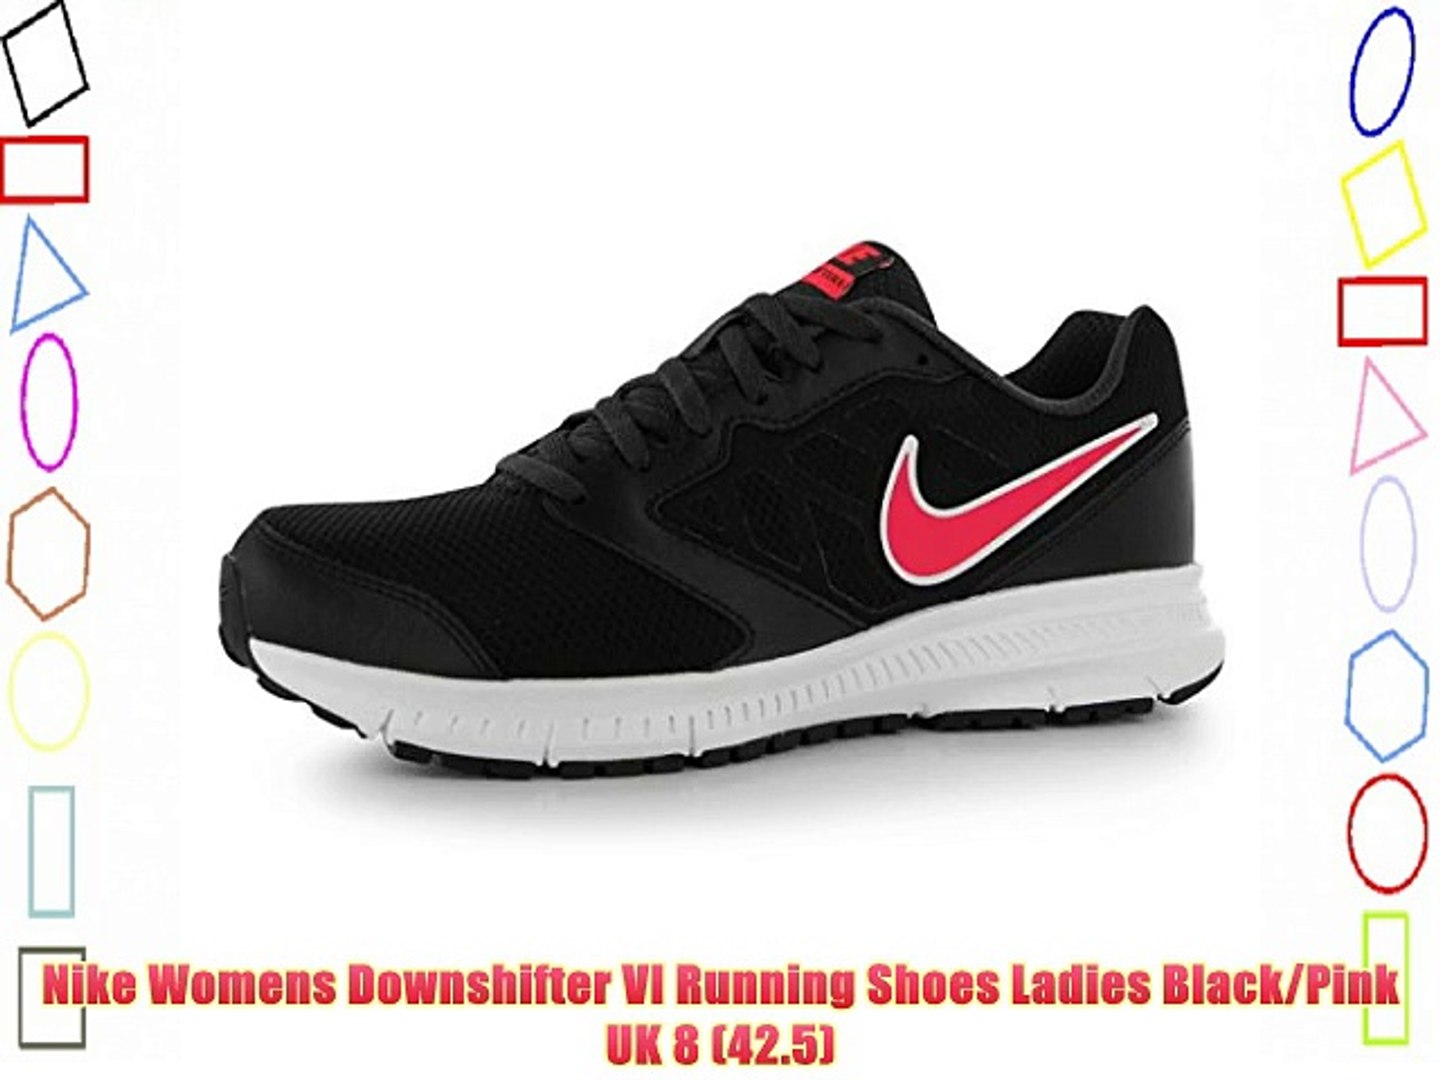 Nike Womens Downshifter VI Running Shoes Ladies Black/Pink UK 8 (42.5) -  video Dailymotion